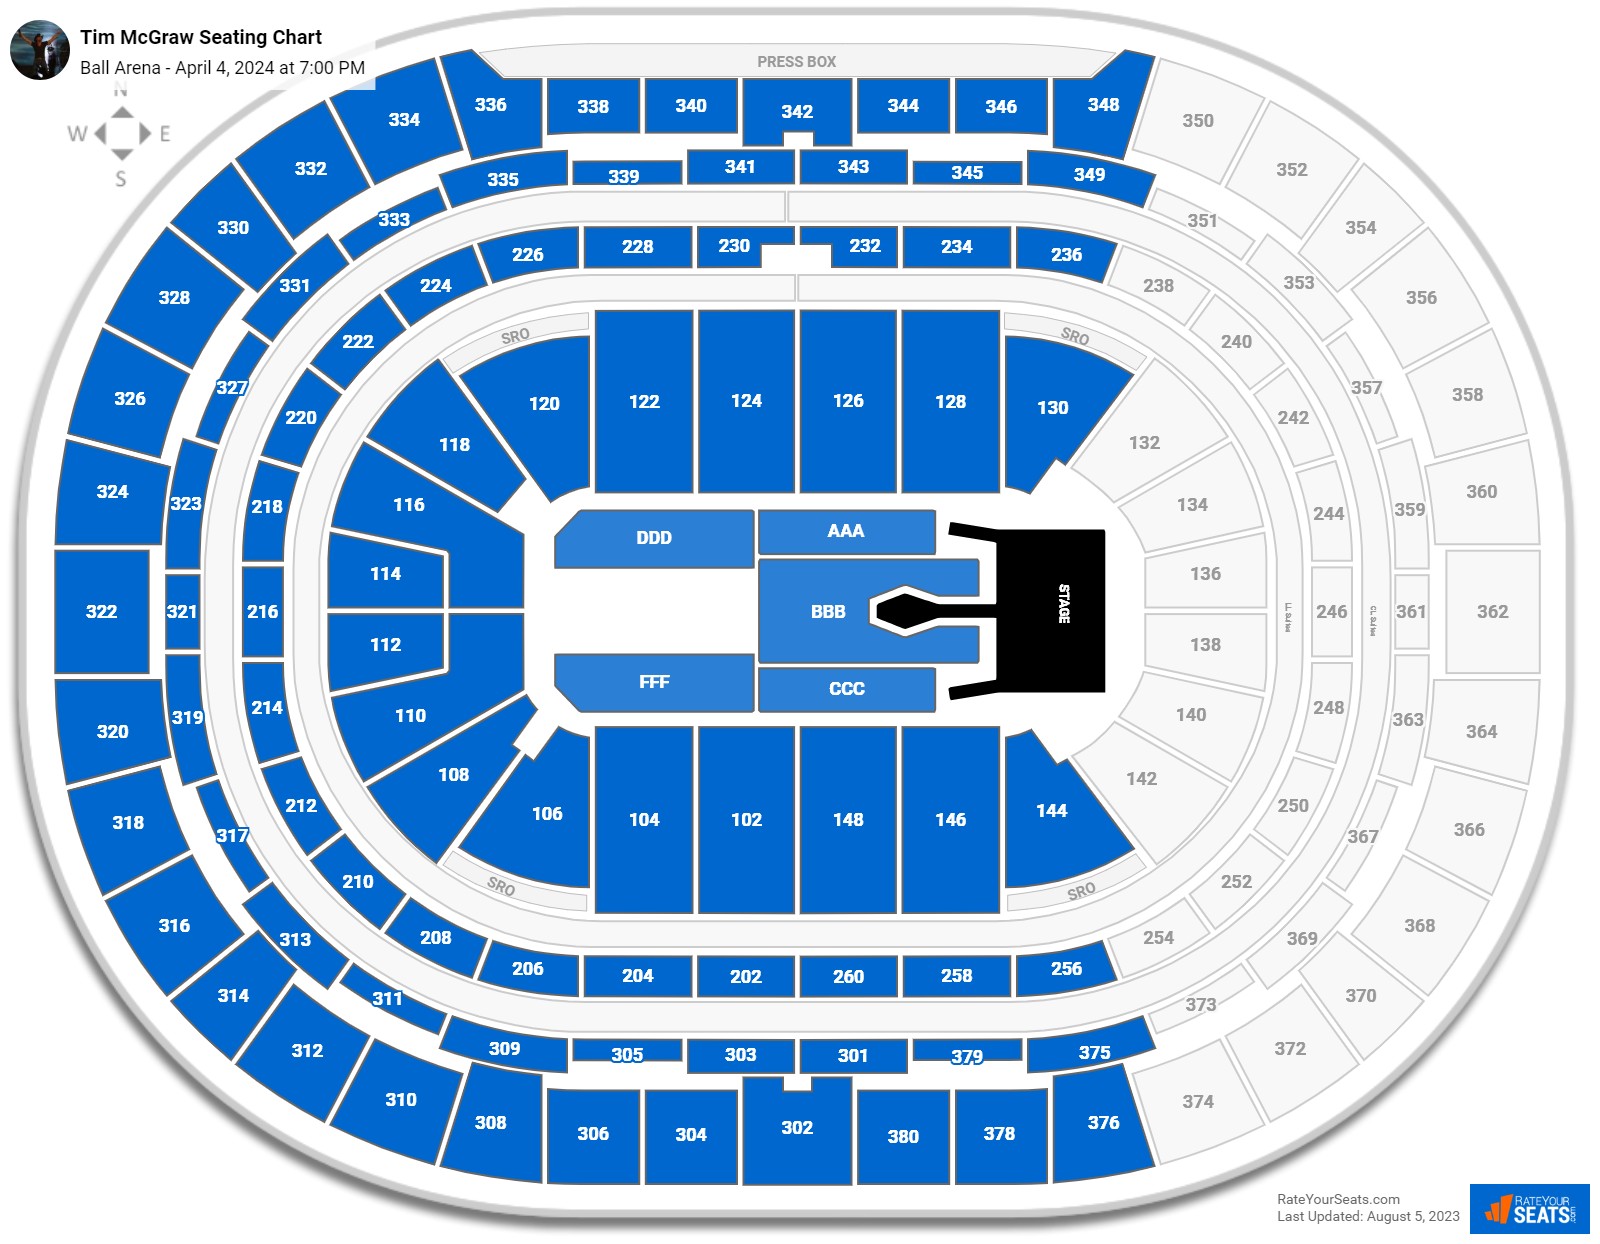 Ball Arena Concert Seating Chart Rateyourseats Com